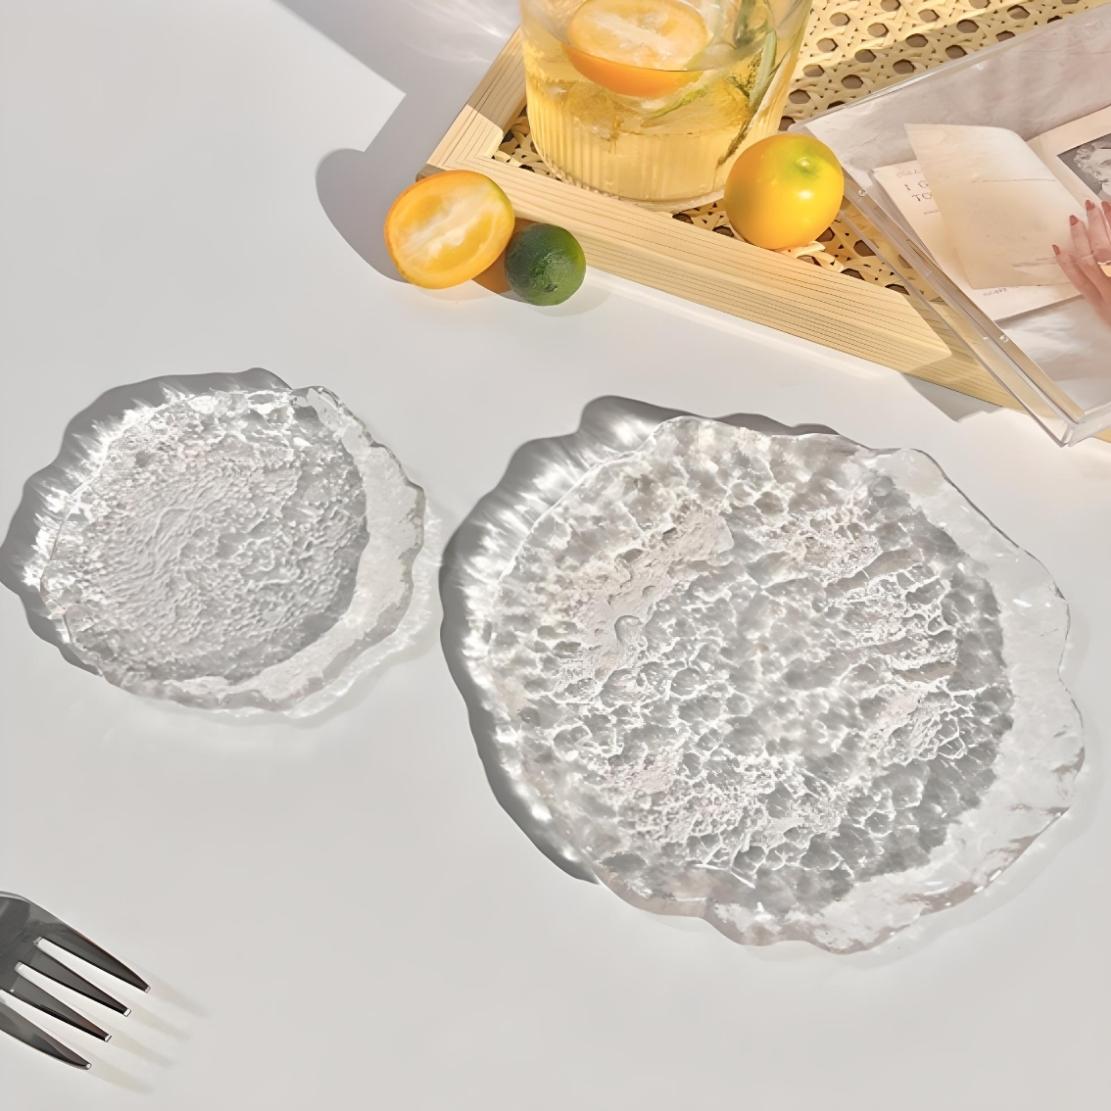 Asymmetrical glass diningware plates